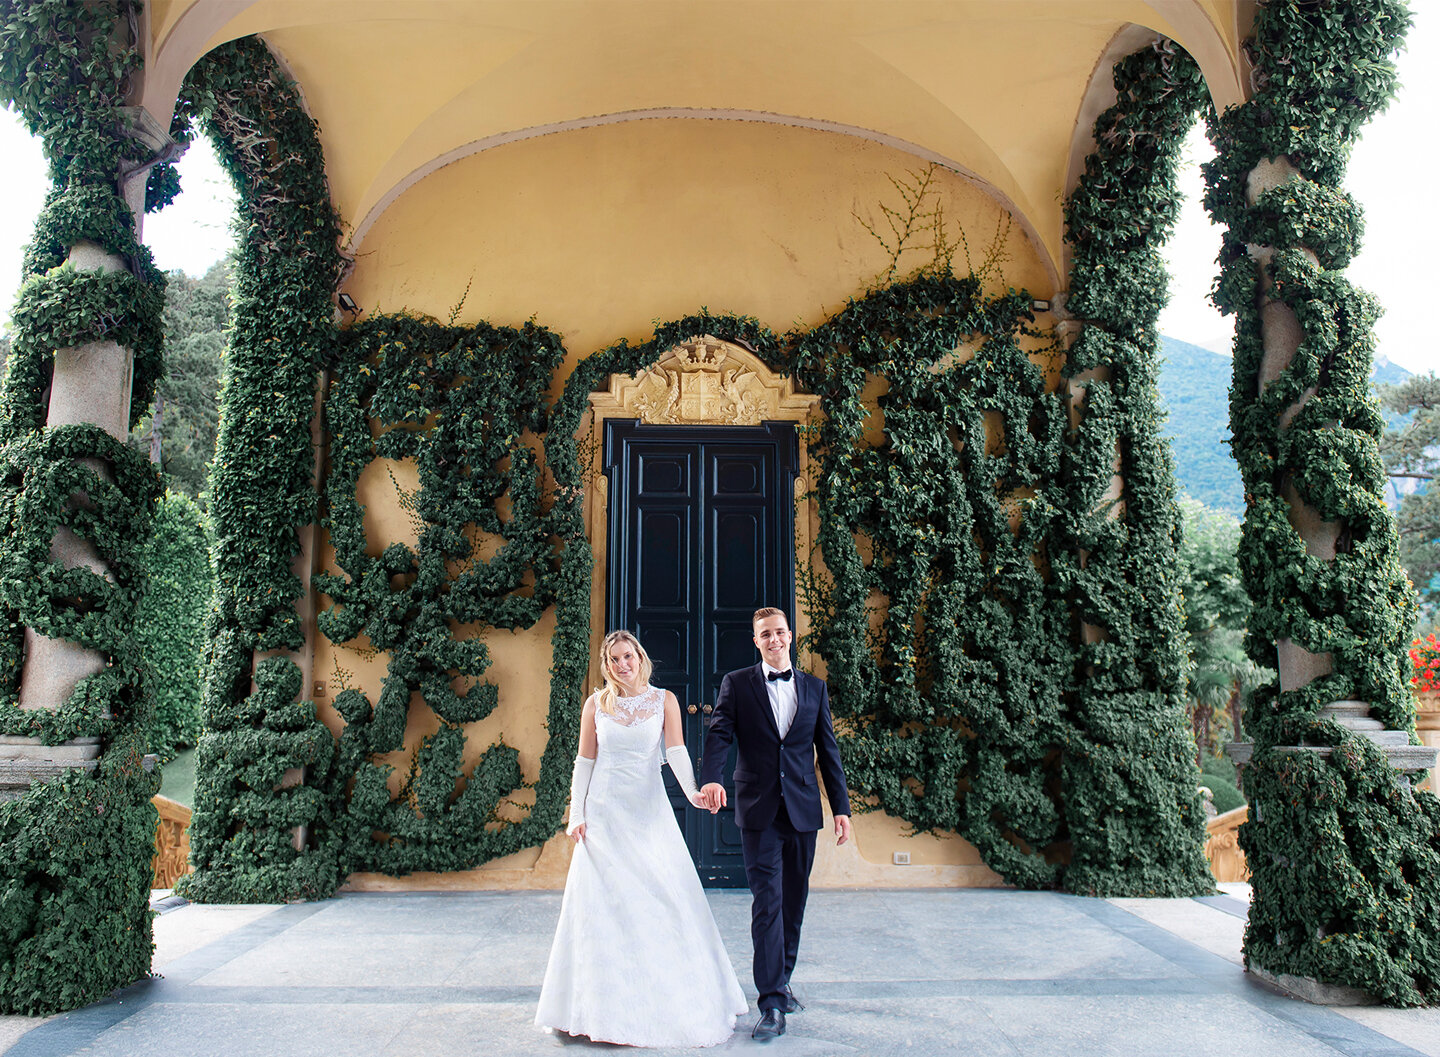 Villa del Balbianello wedding: elegant bride and groom standing on the flowery porch